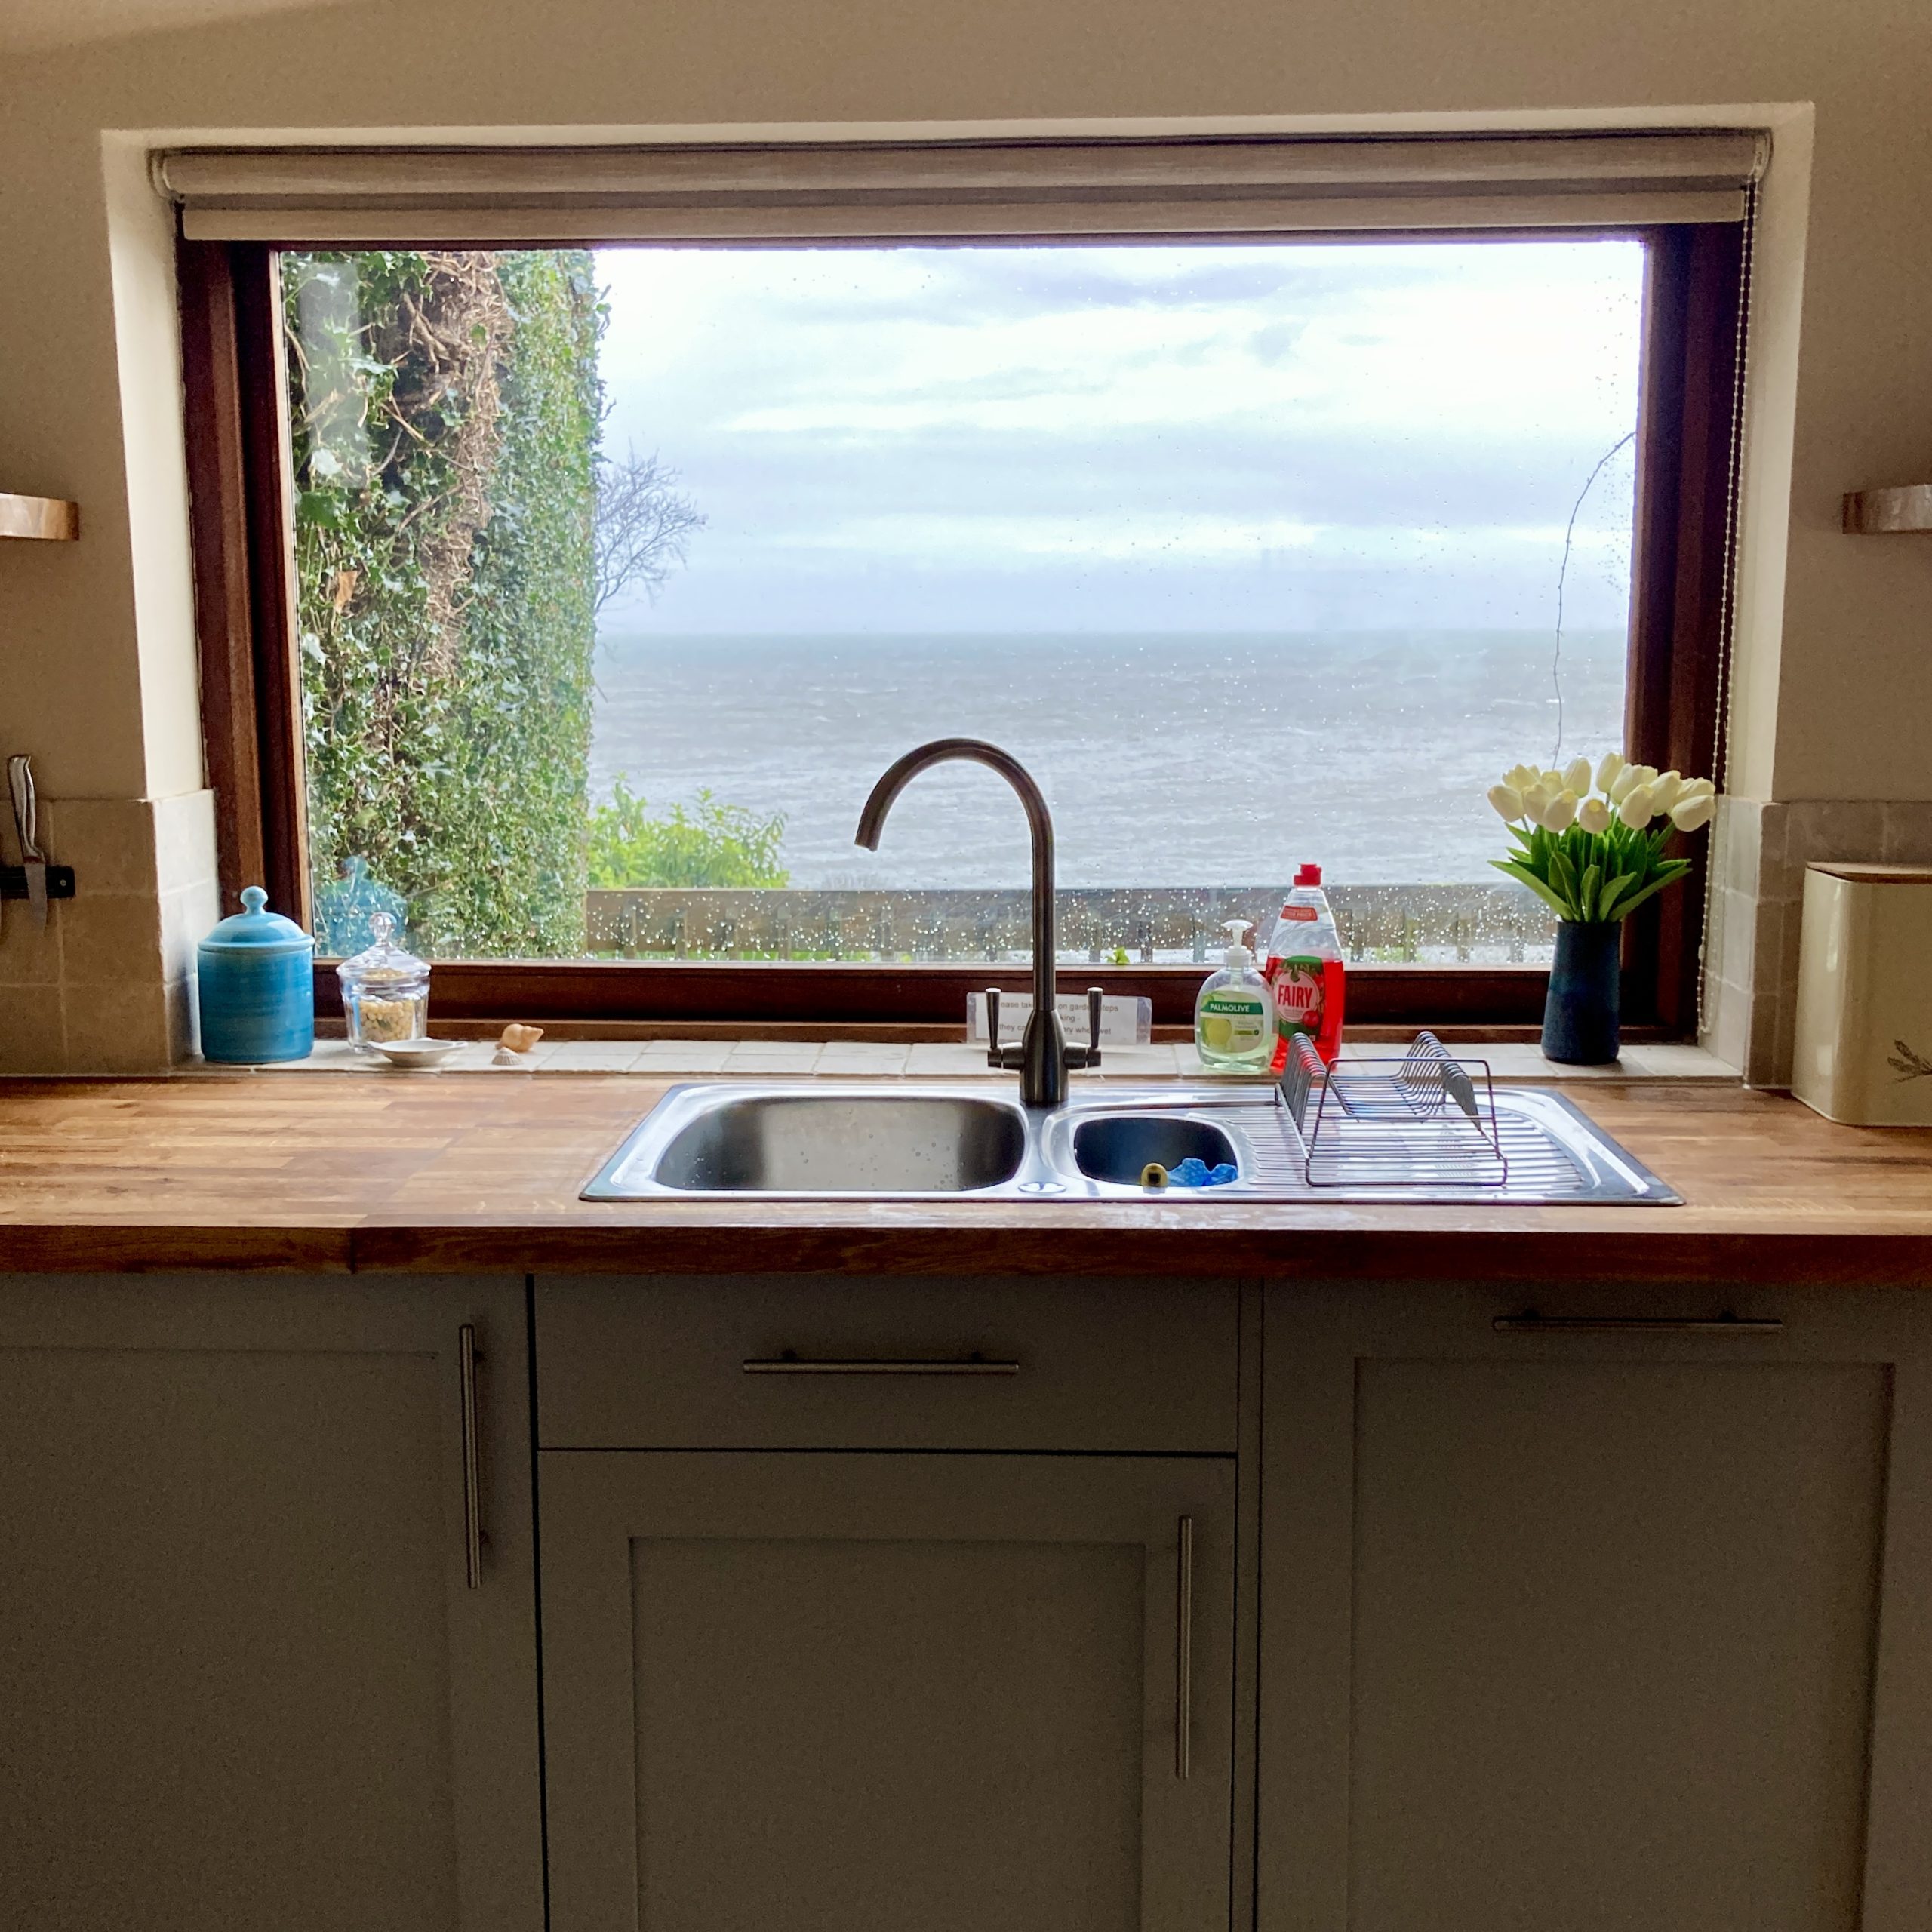 Kitchen sink with sea view @ The Coach House, Porlock Weir